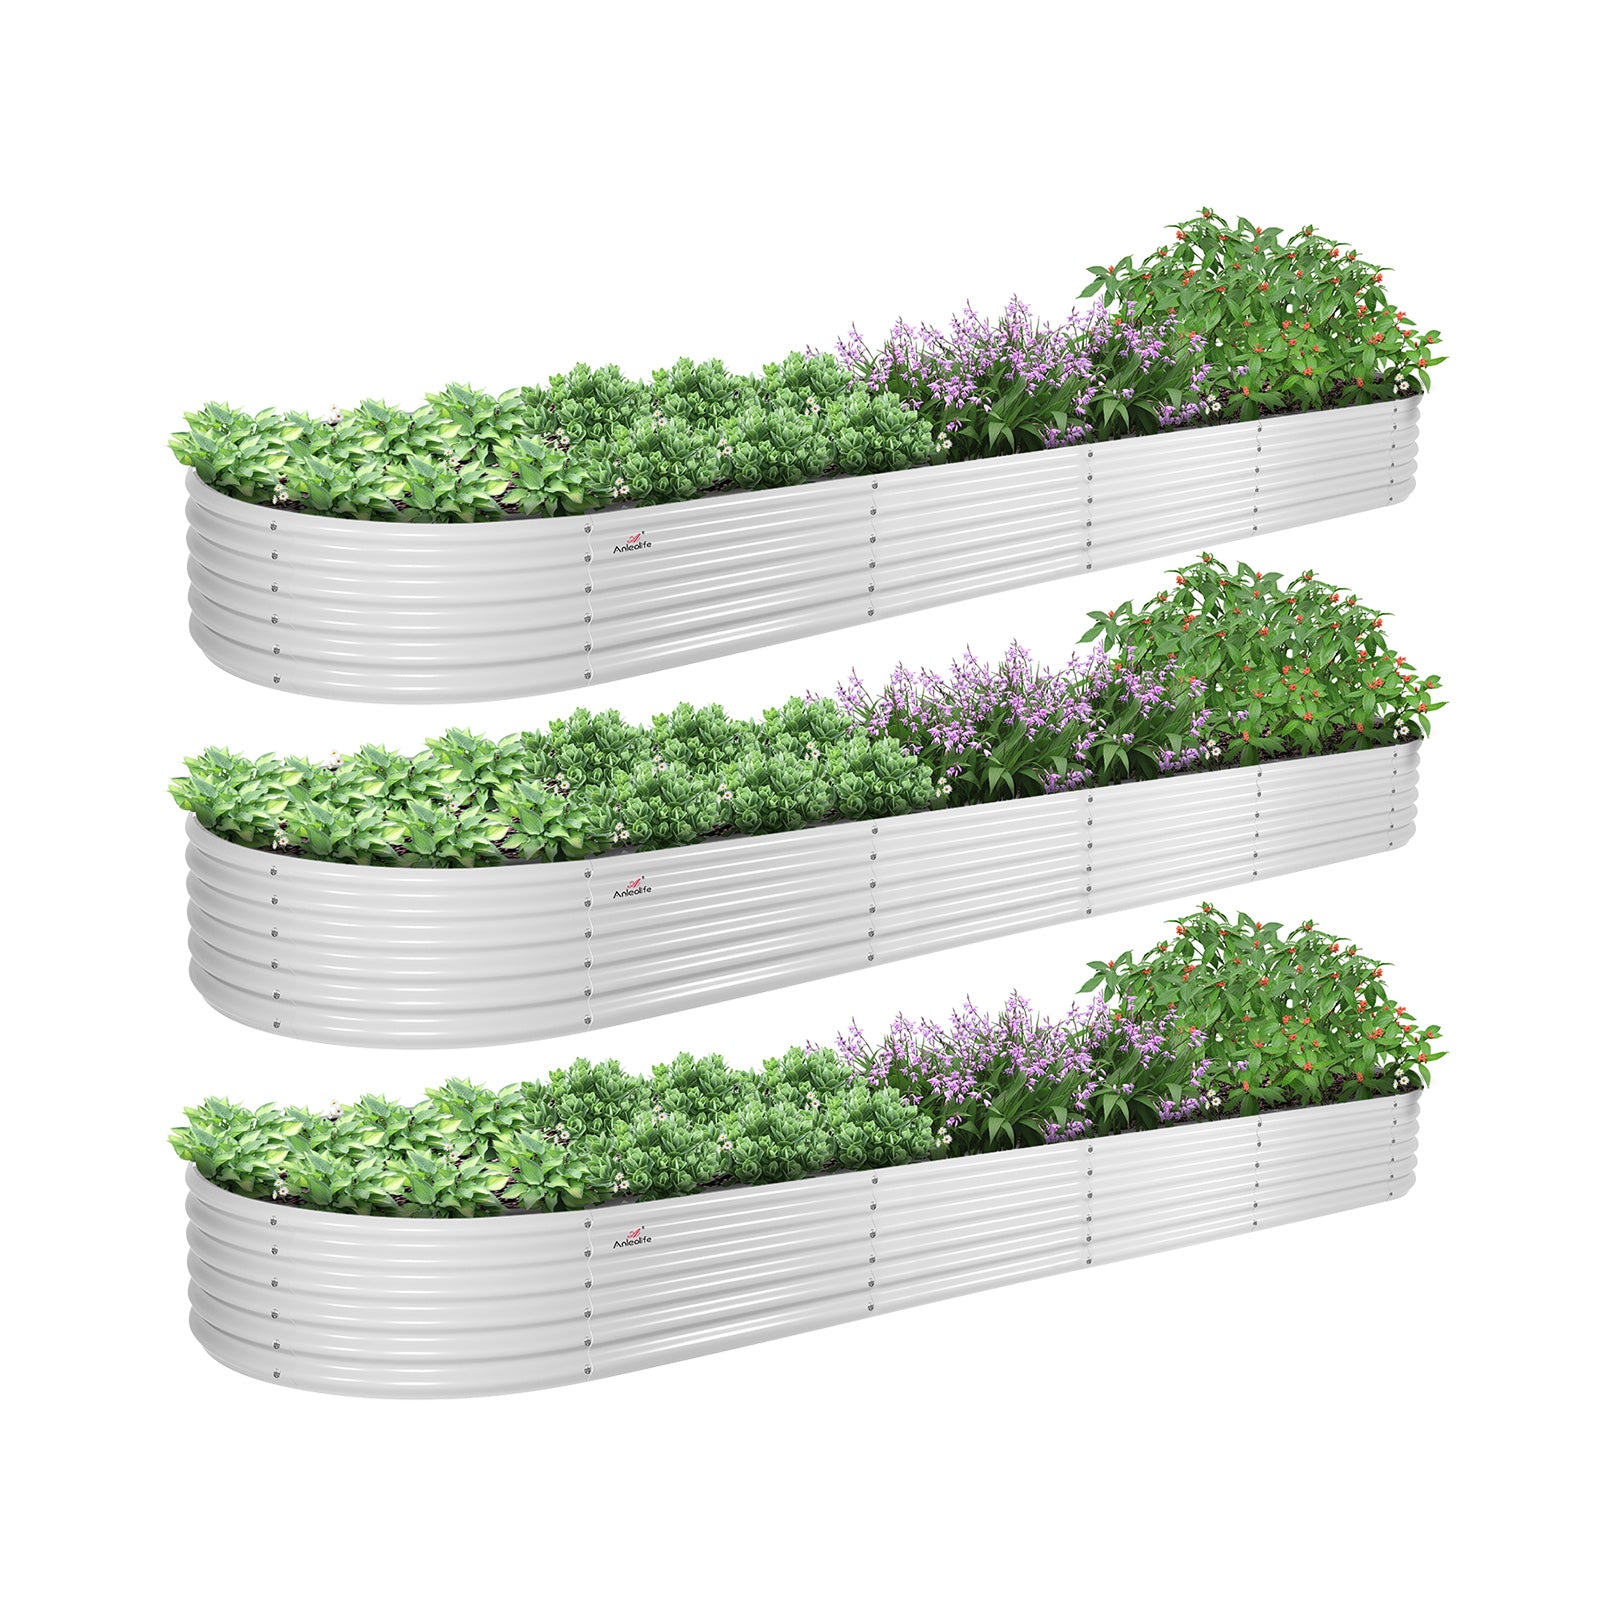 12x3x1.5ft Oval Modular Metal Raised Garden Bed Set (White/Grey)